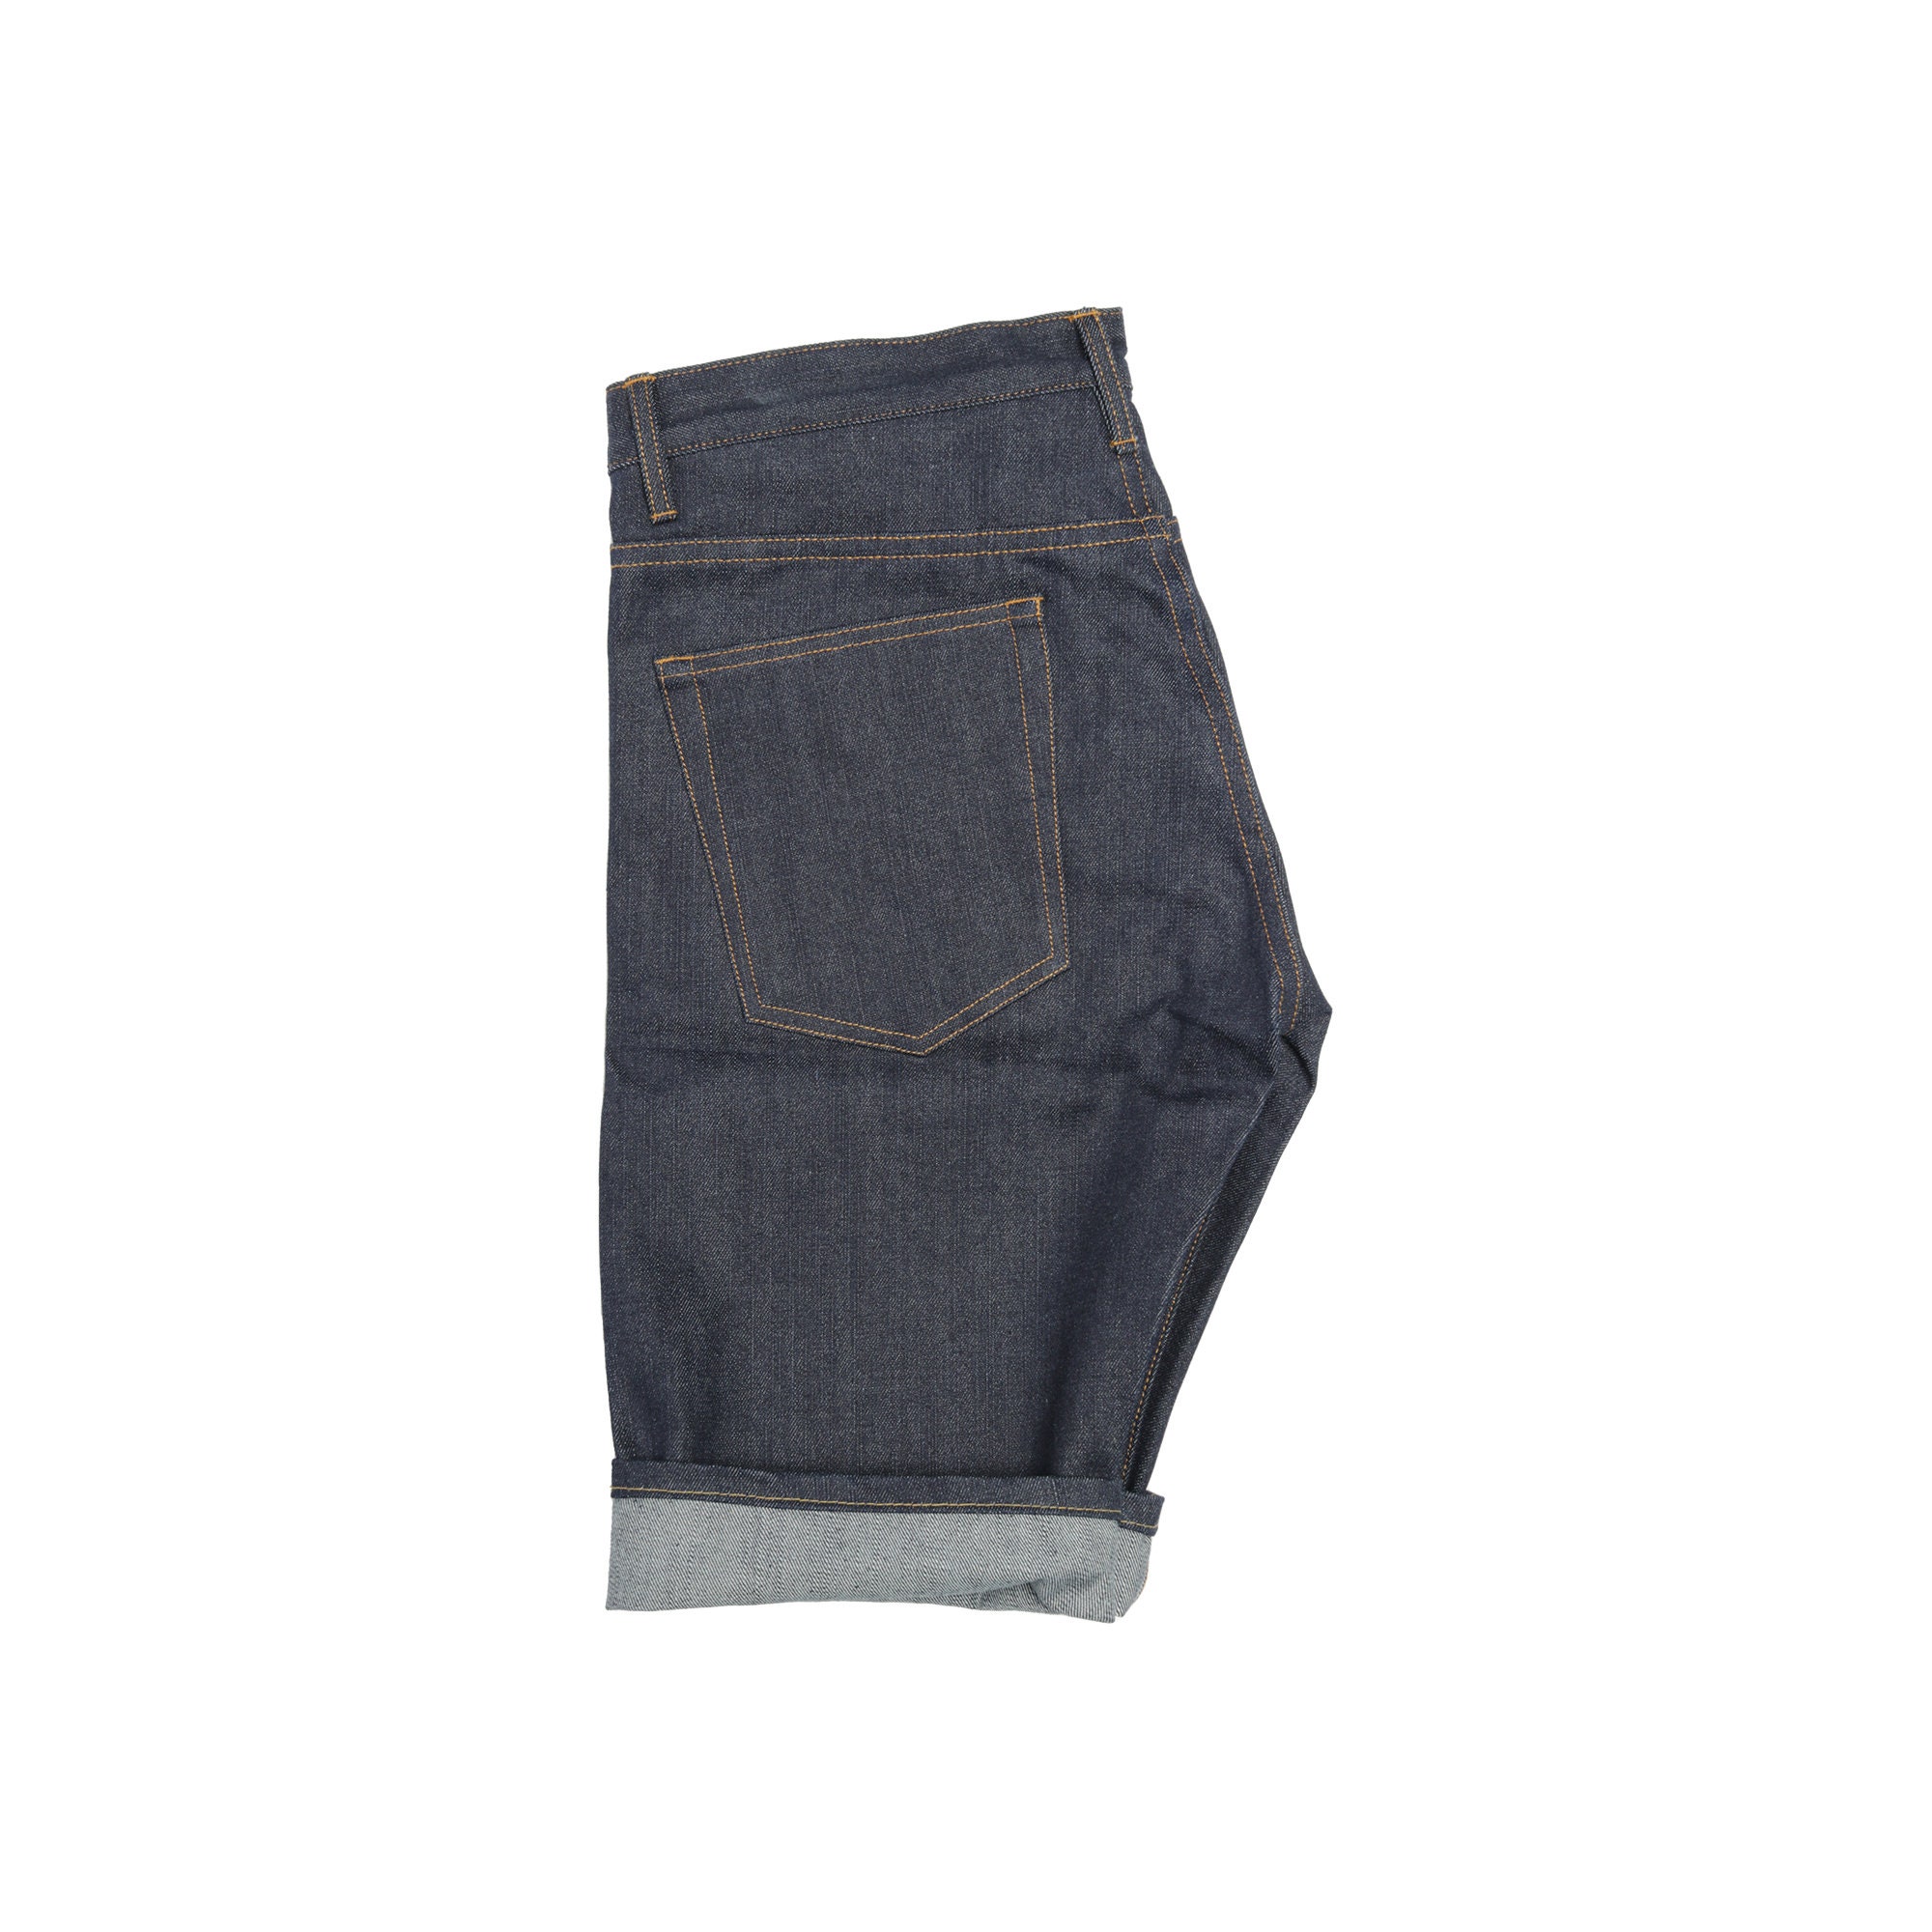 Japanese Selvedge Dry Denim Shorts Mid Rise Short Pants Jeans - Etsy